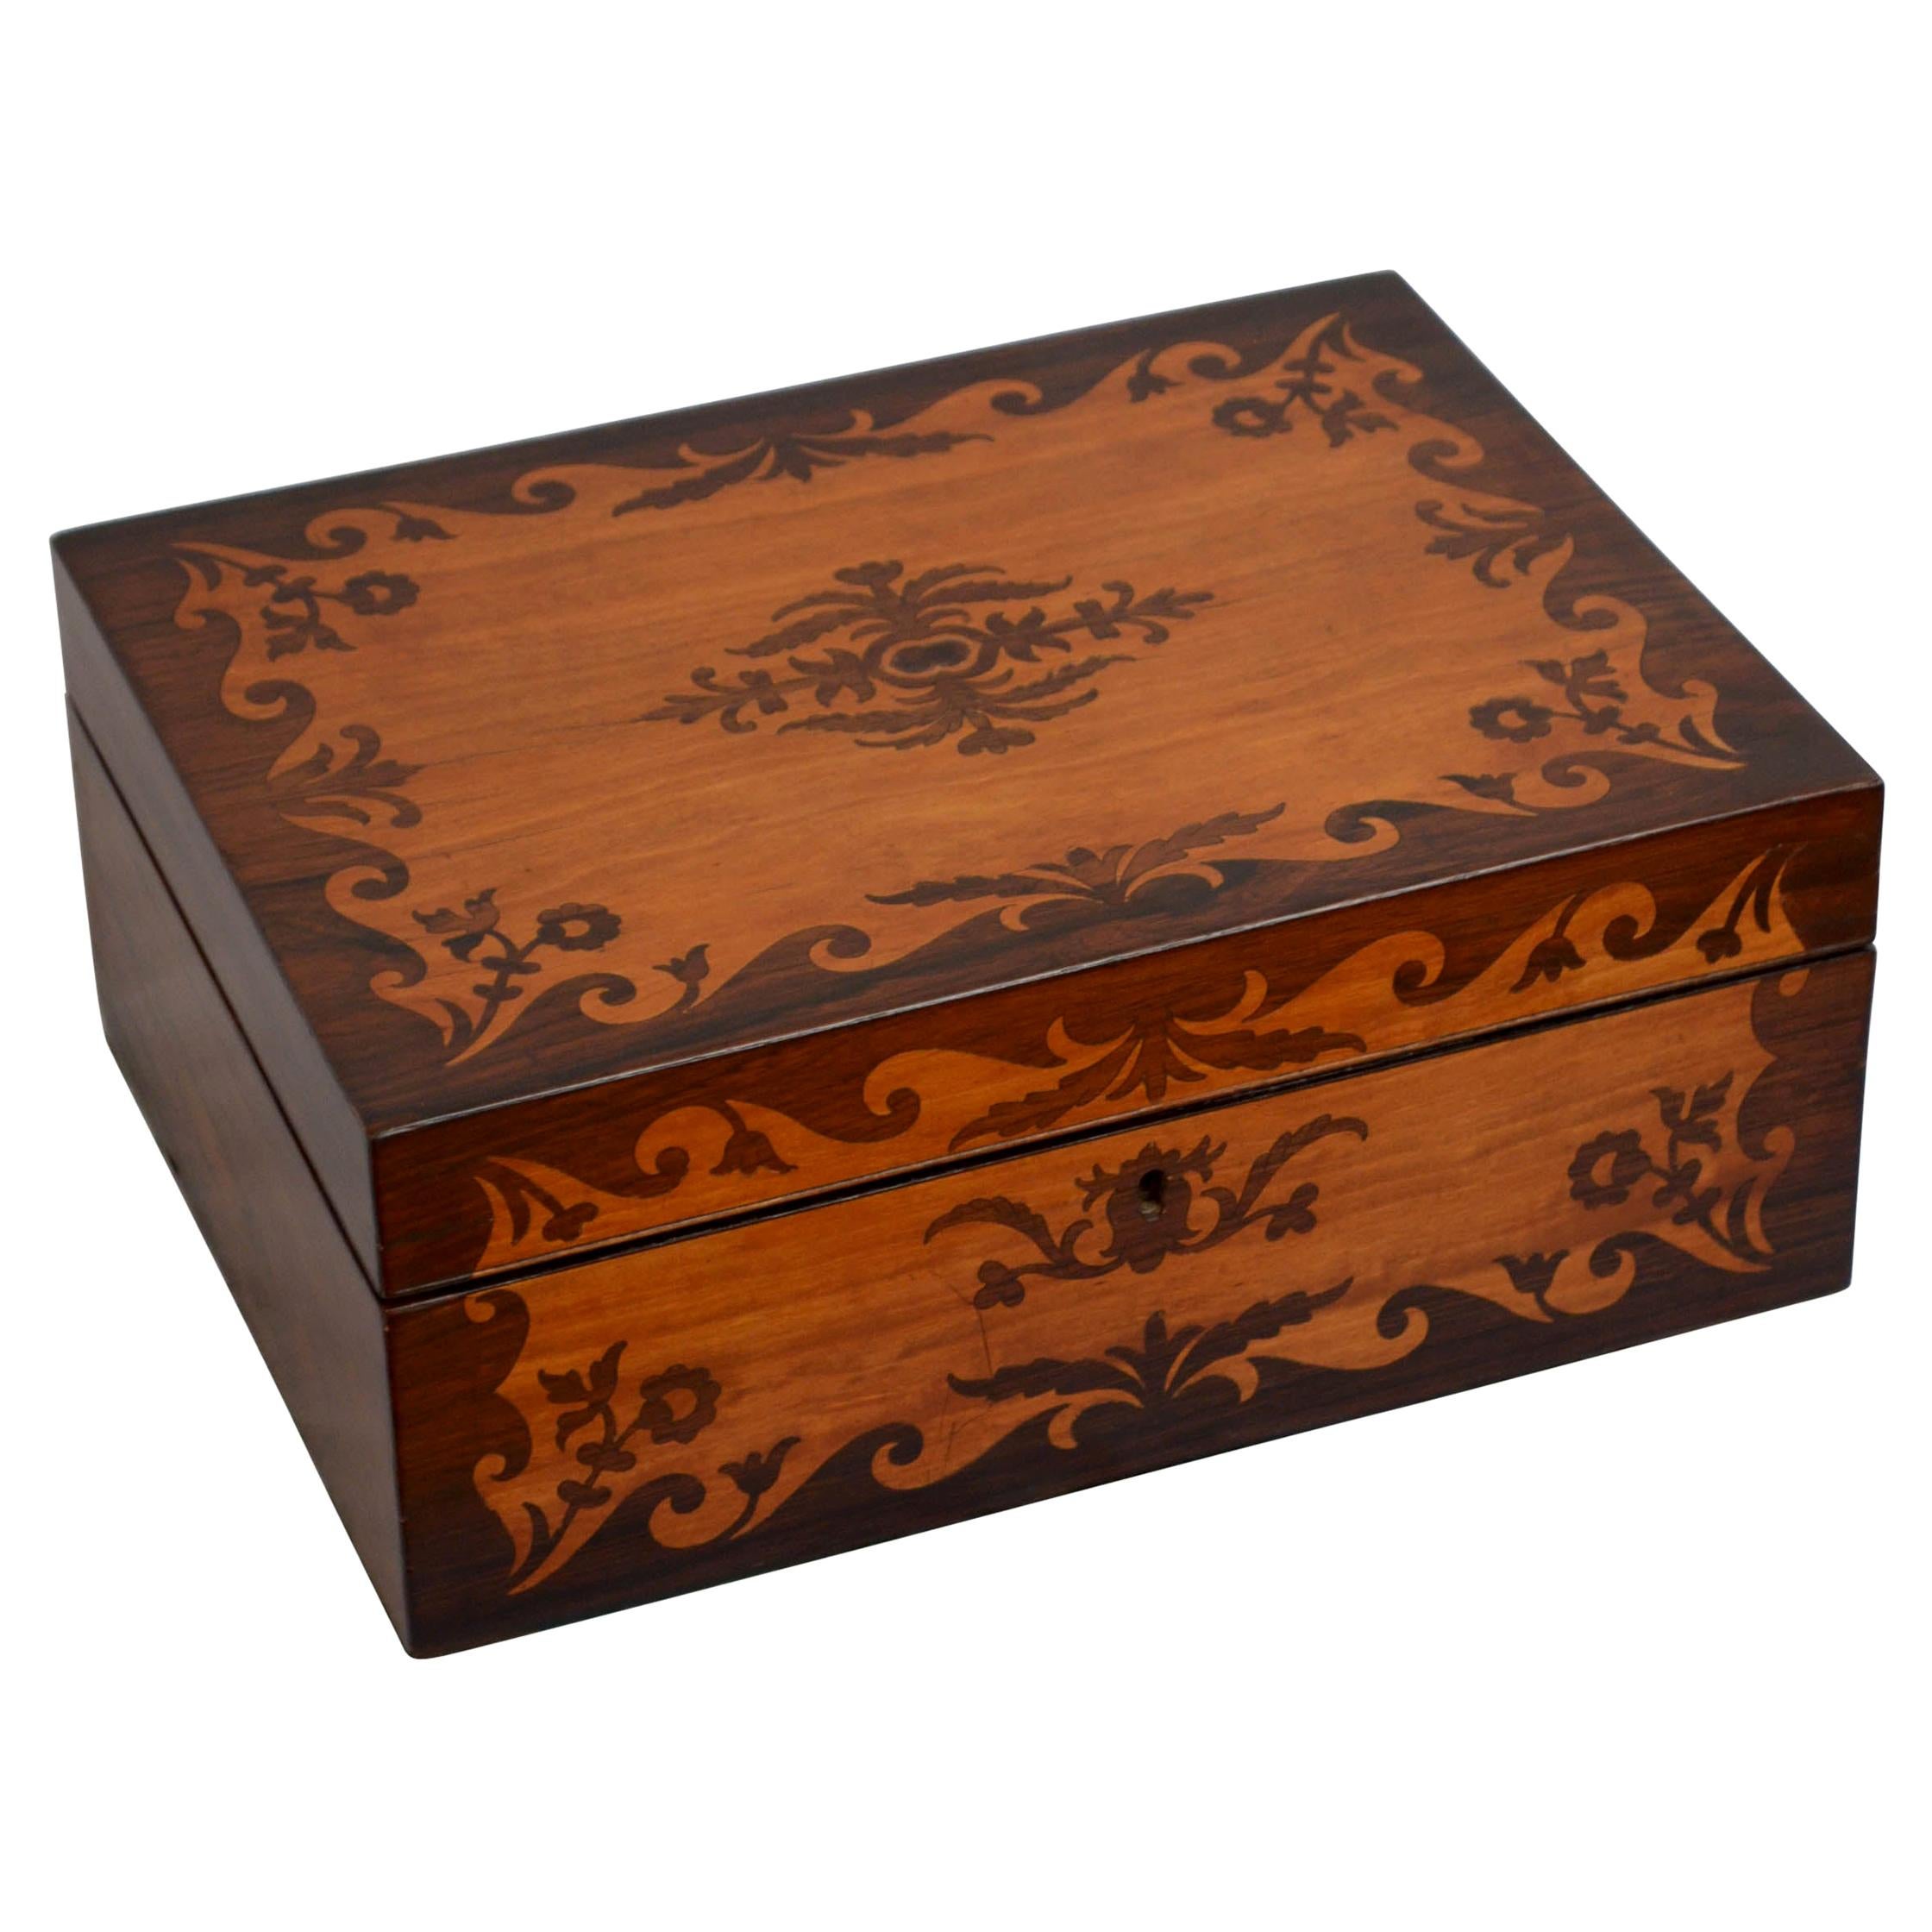 Exquisite Victorian Jewelry Box